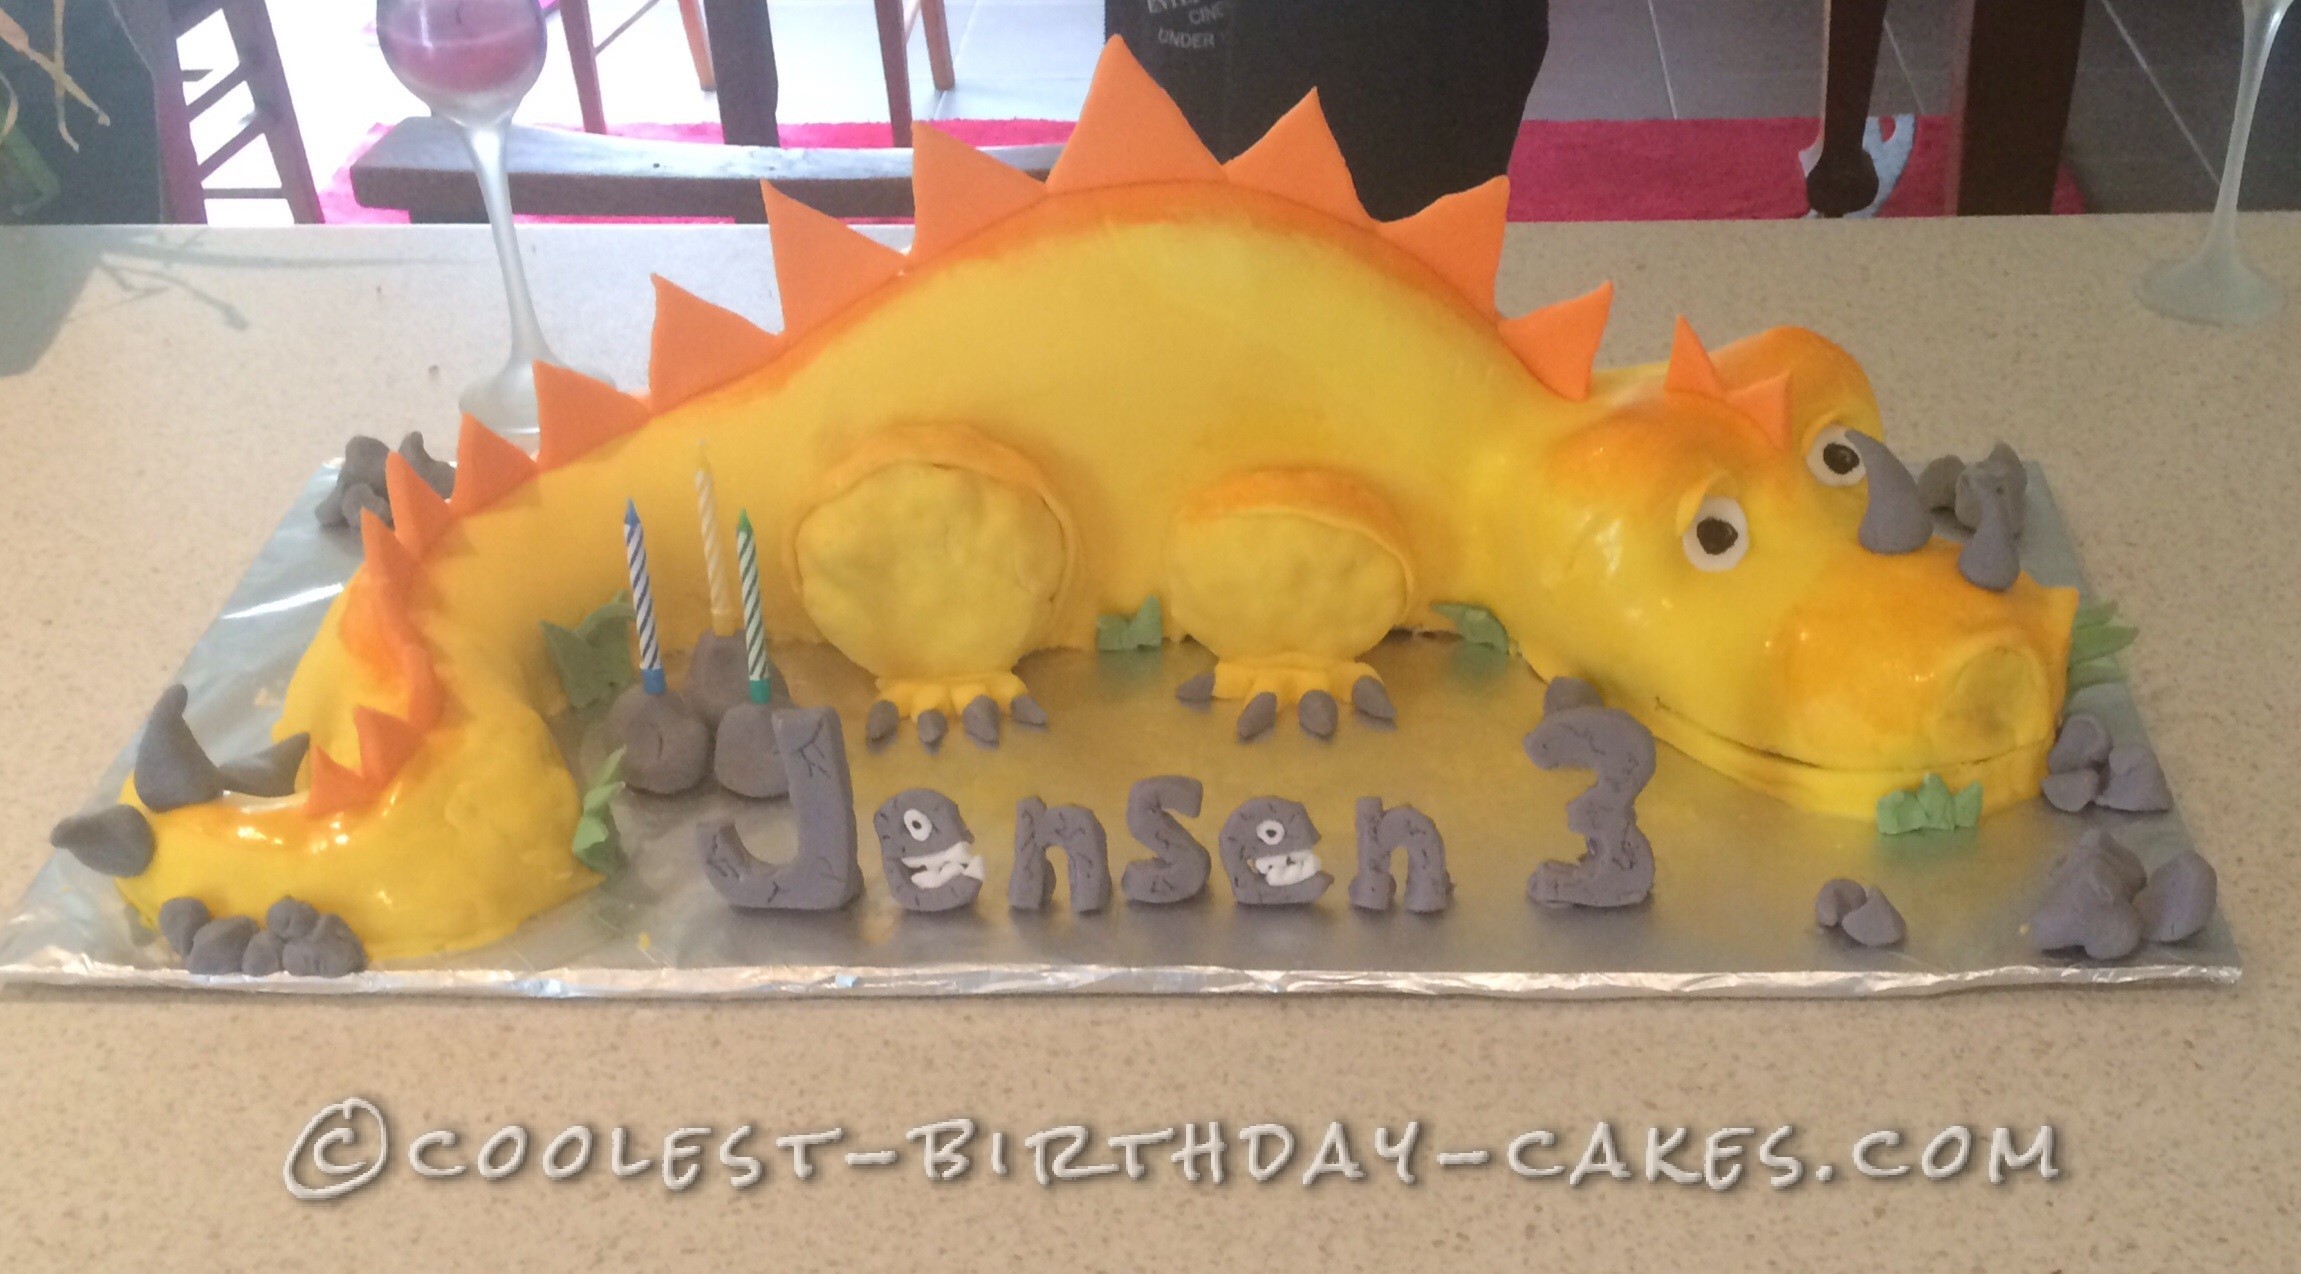 Coolest Dino 3rd Birthday Cake